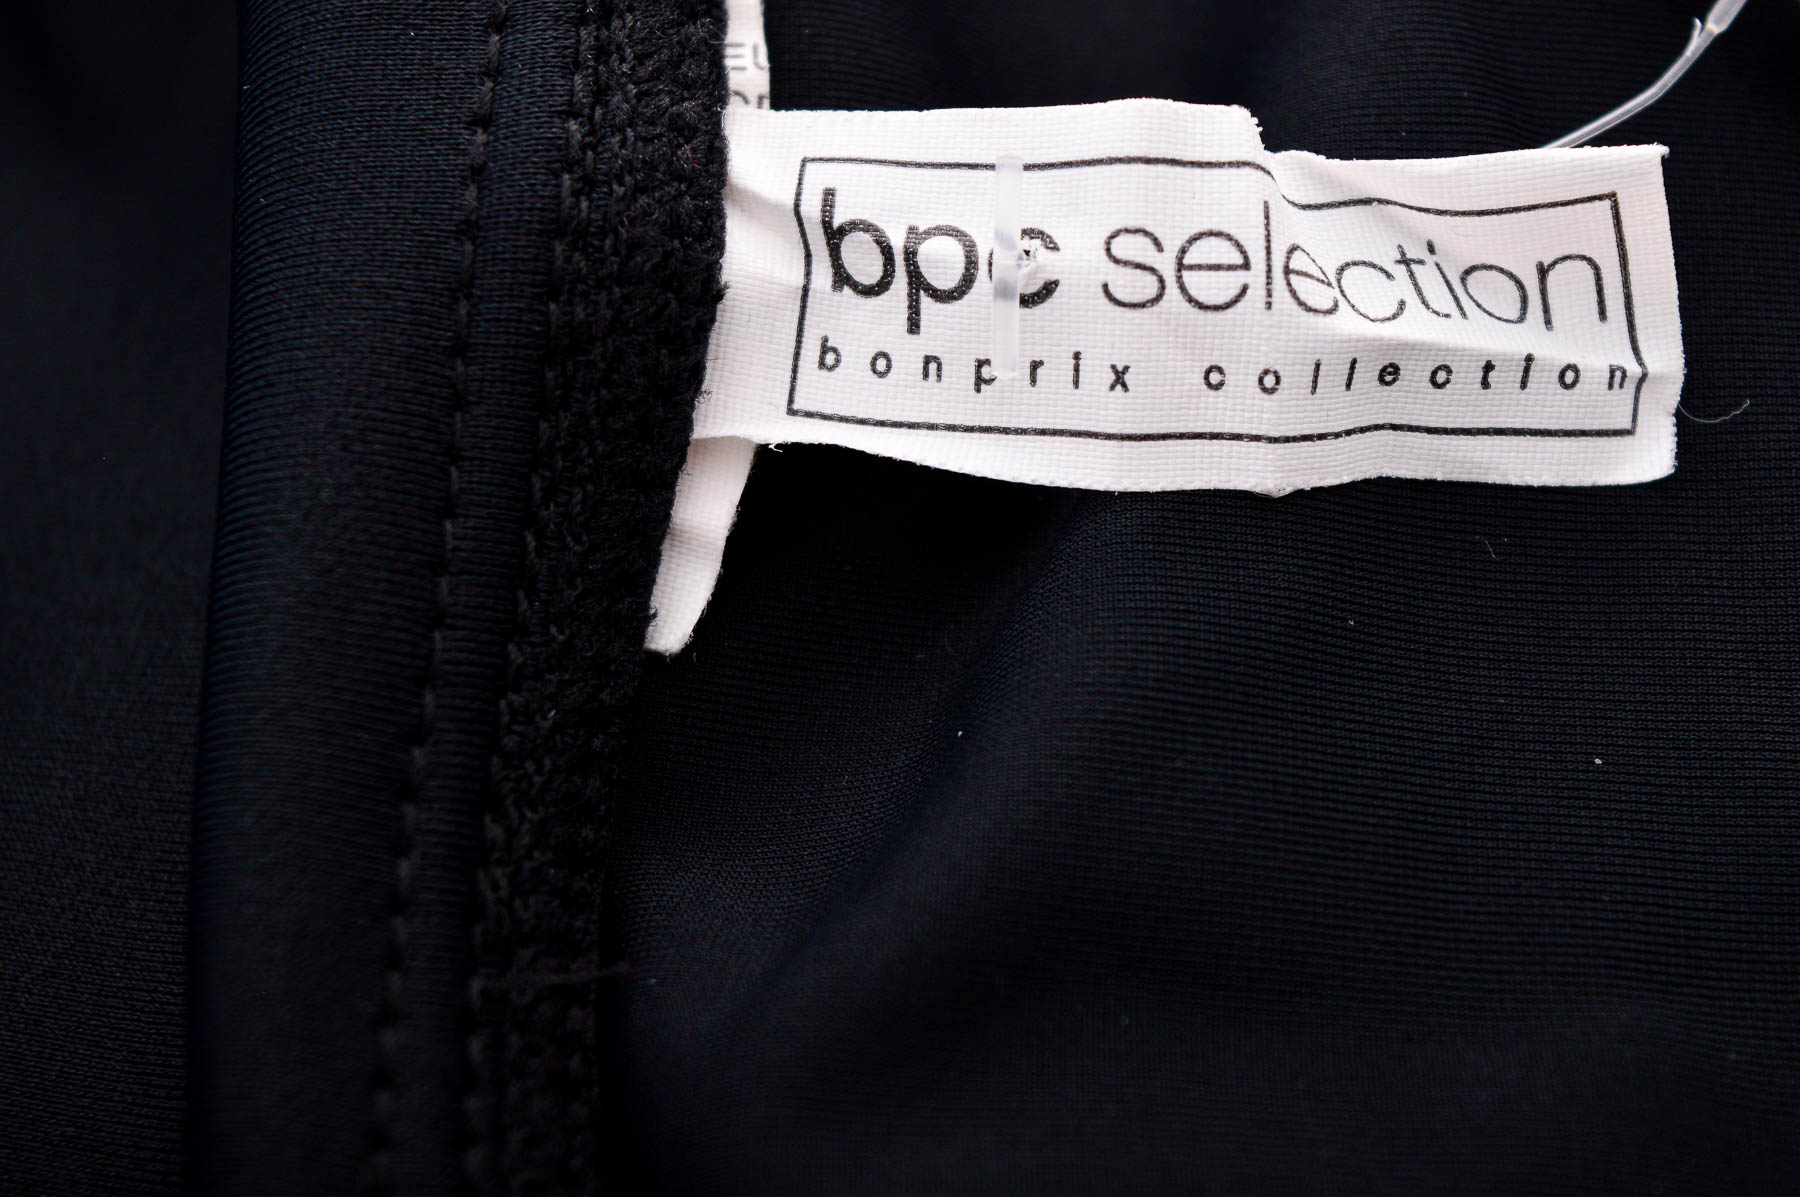 Fustă - pantalon - Bpc selection bonprix collection - 2